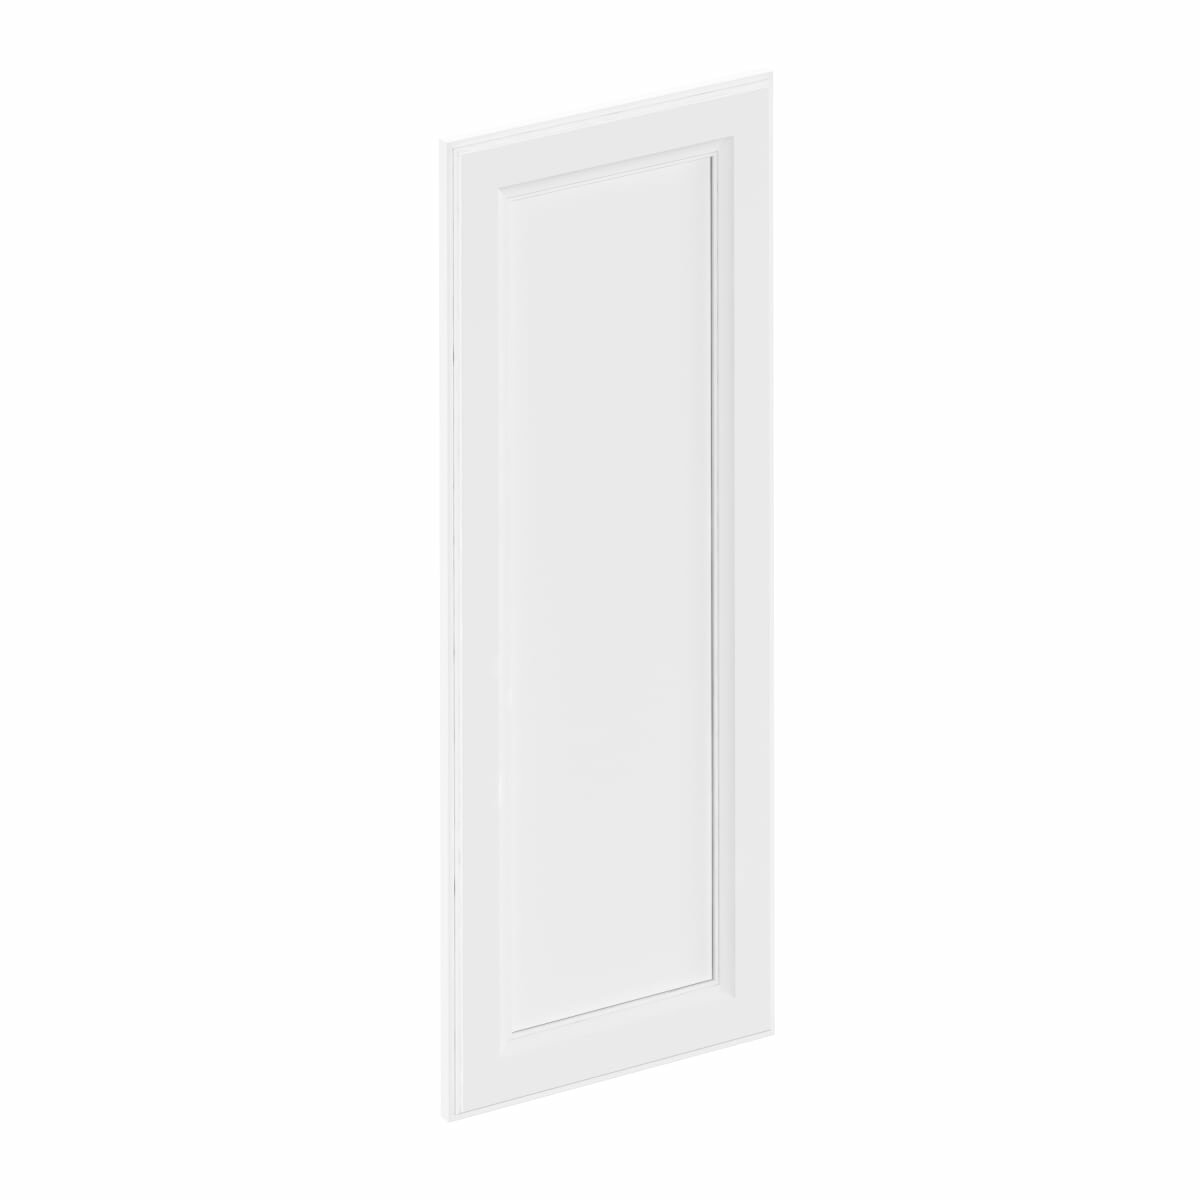 Дверь для шкафа Delinia ID «Реш» 30x77 см МДФ цвет белый